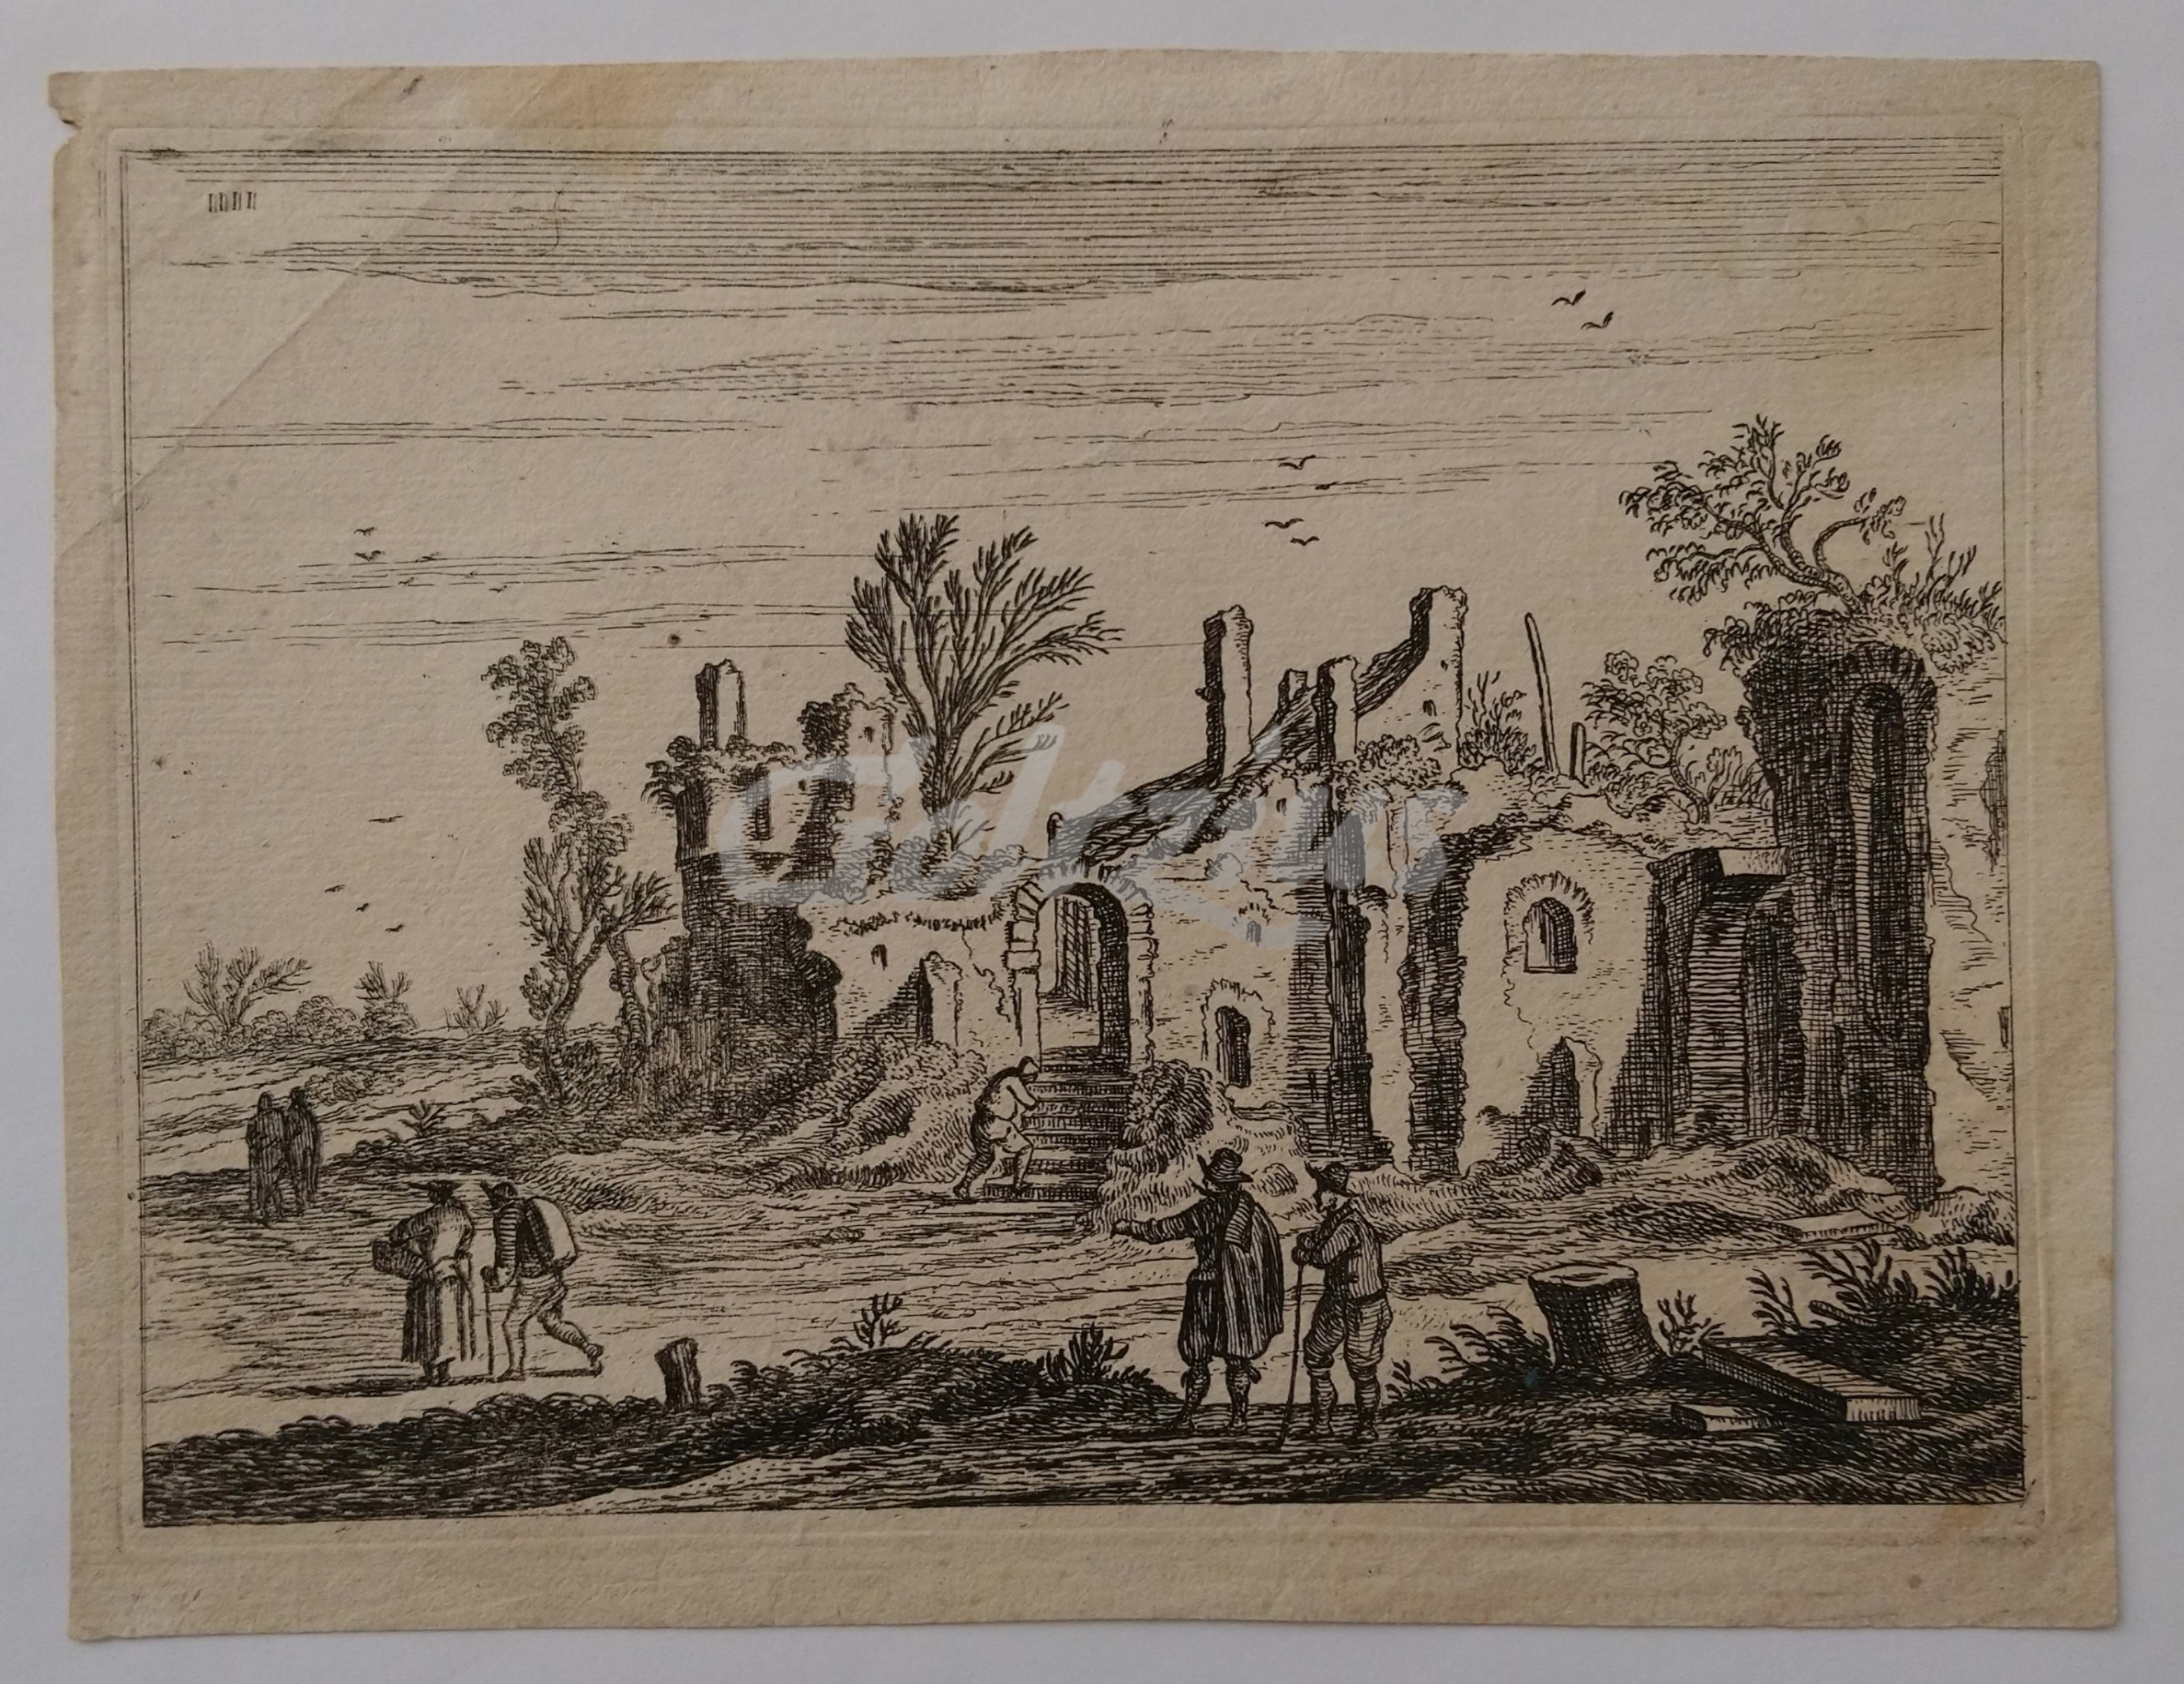 GRONSVELD, JOHANNES, Landscape with ruin